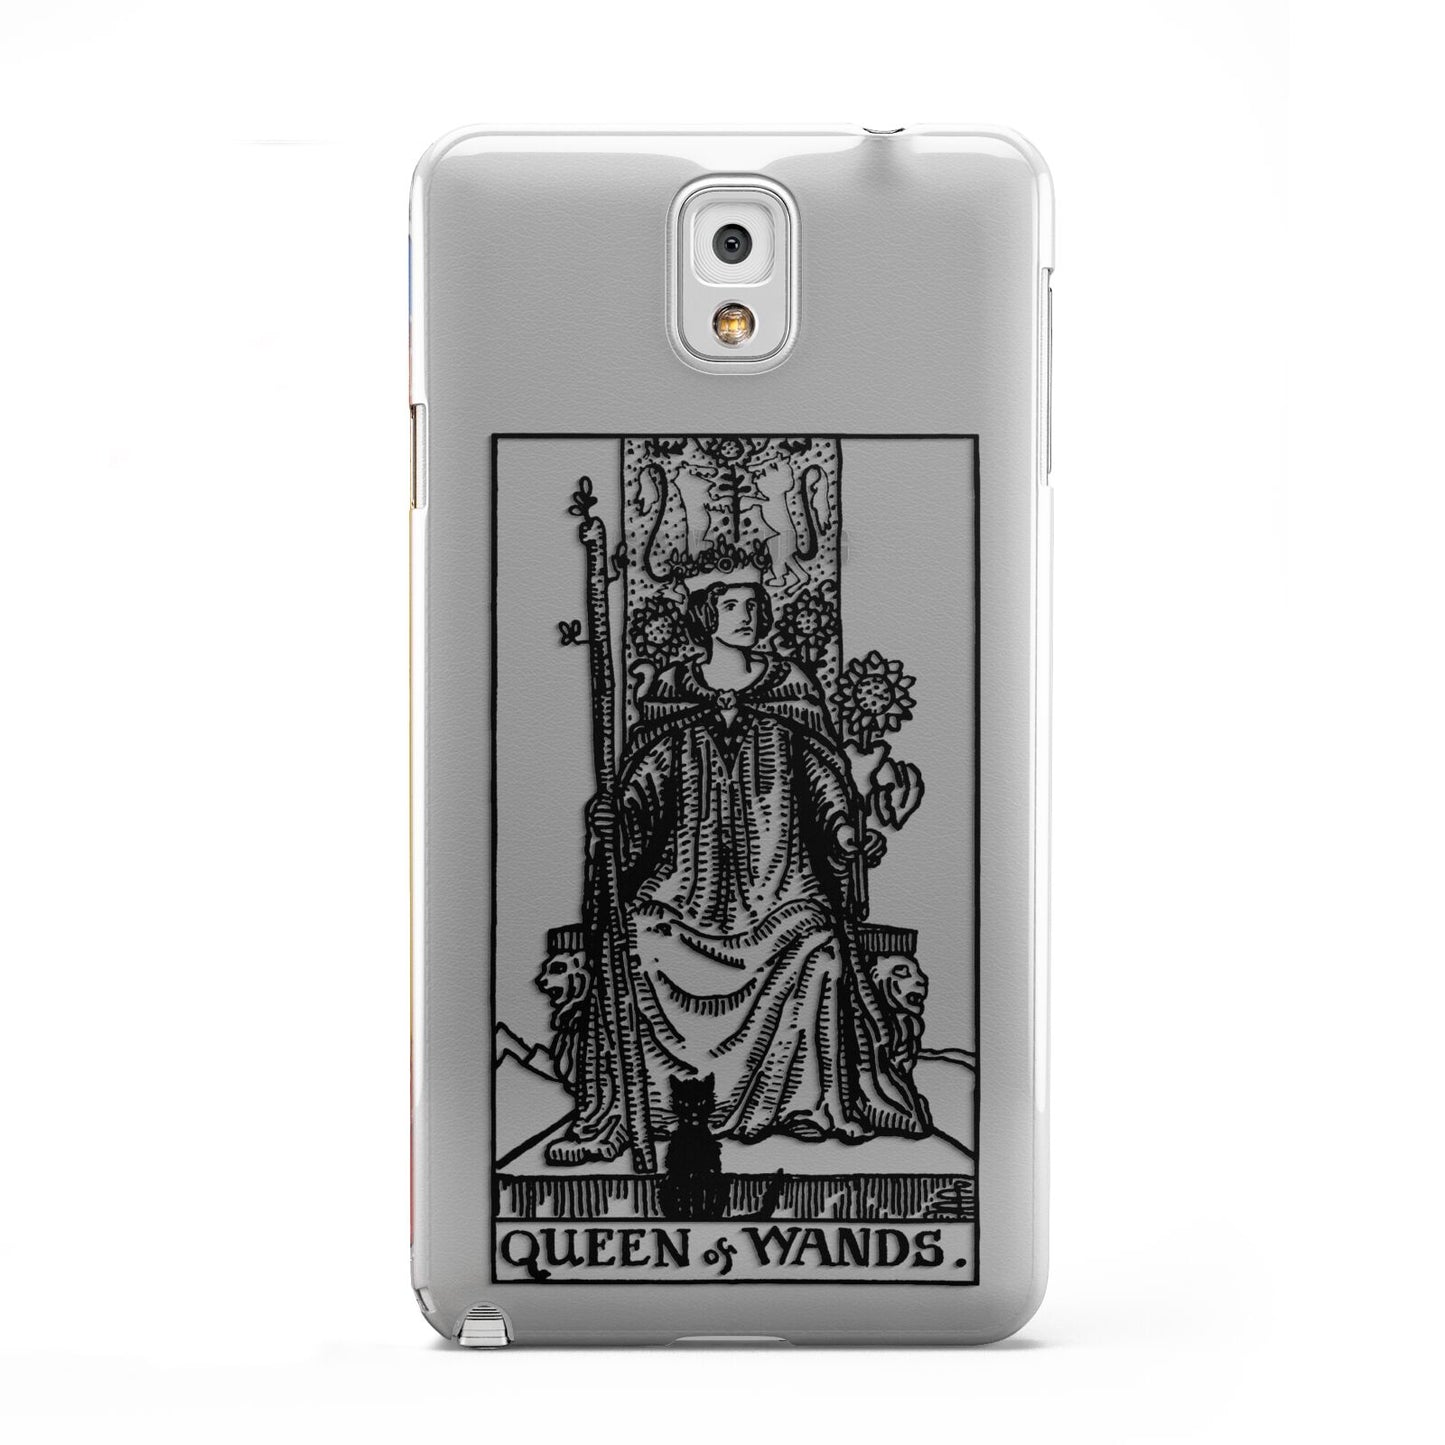 Queen of Wands Monochrome Samsung Galaxy Note 3 Case